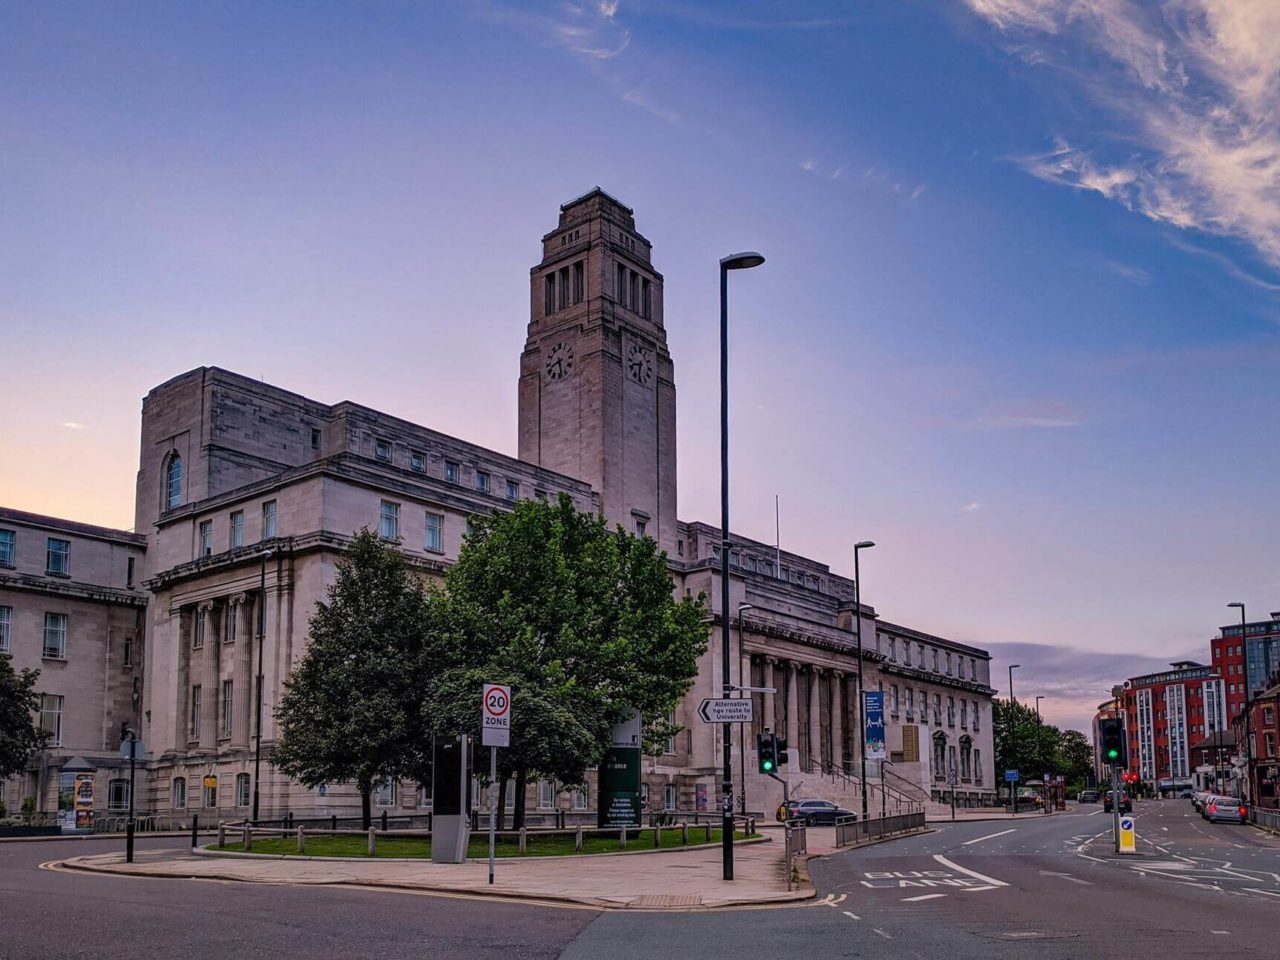 Partnership ENIL – University of Leeds